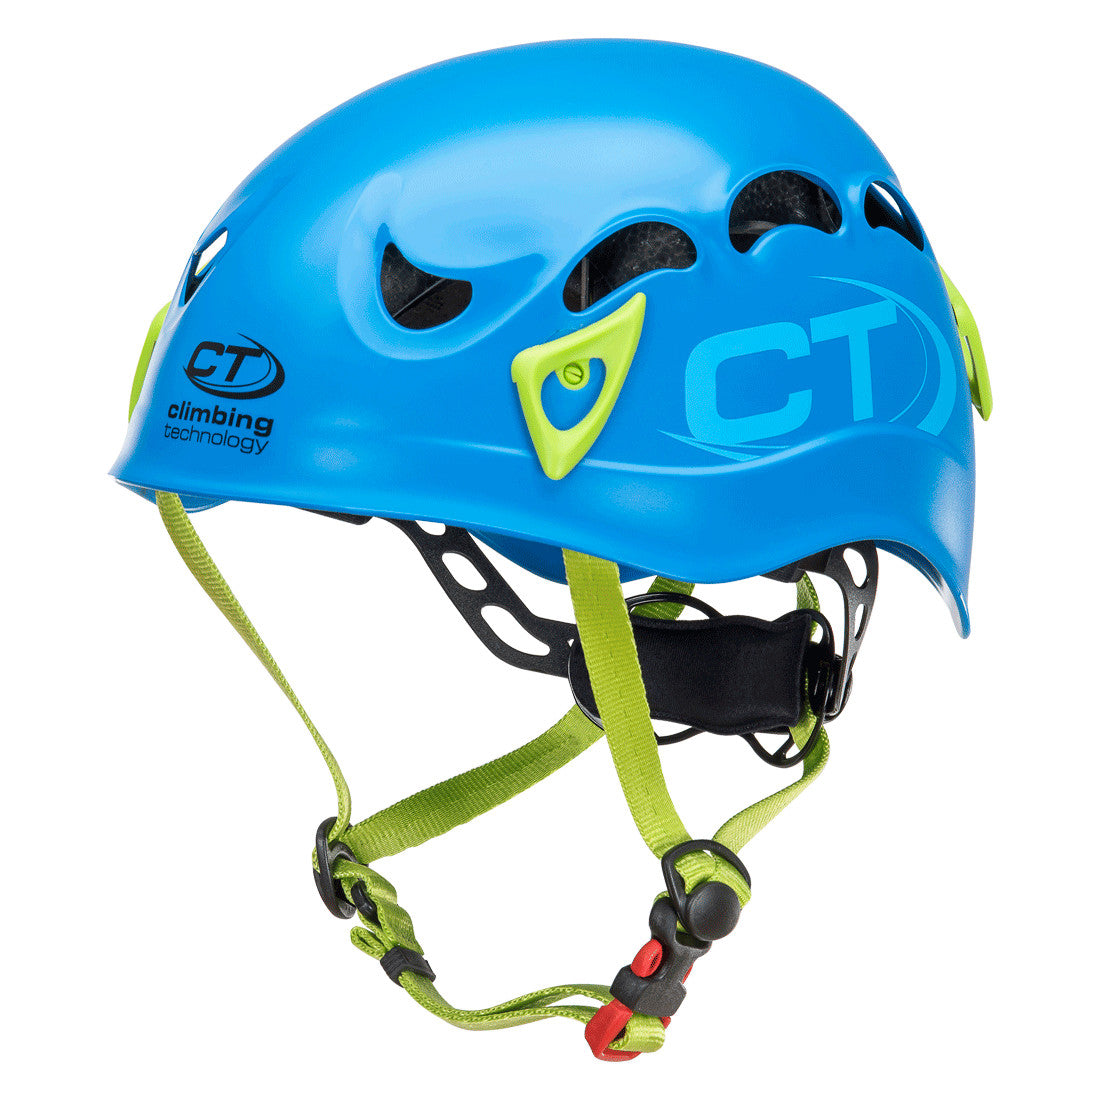 Climbing Technology Galaxy climbing helmet, in blue and green colours